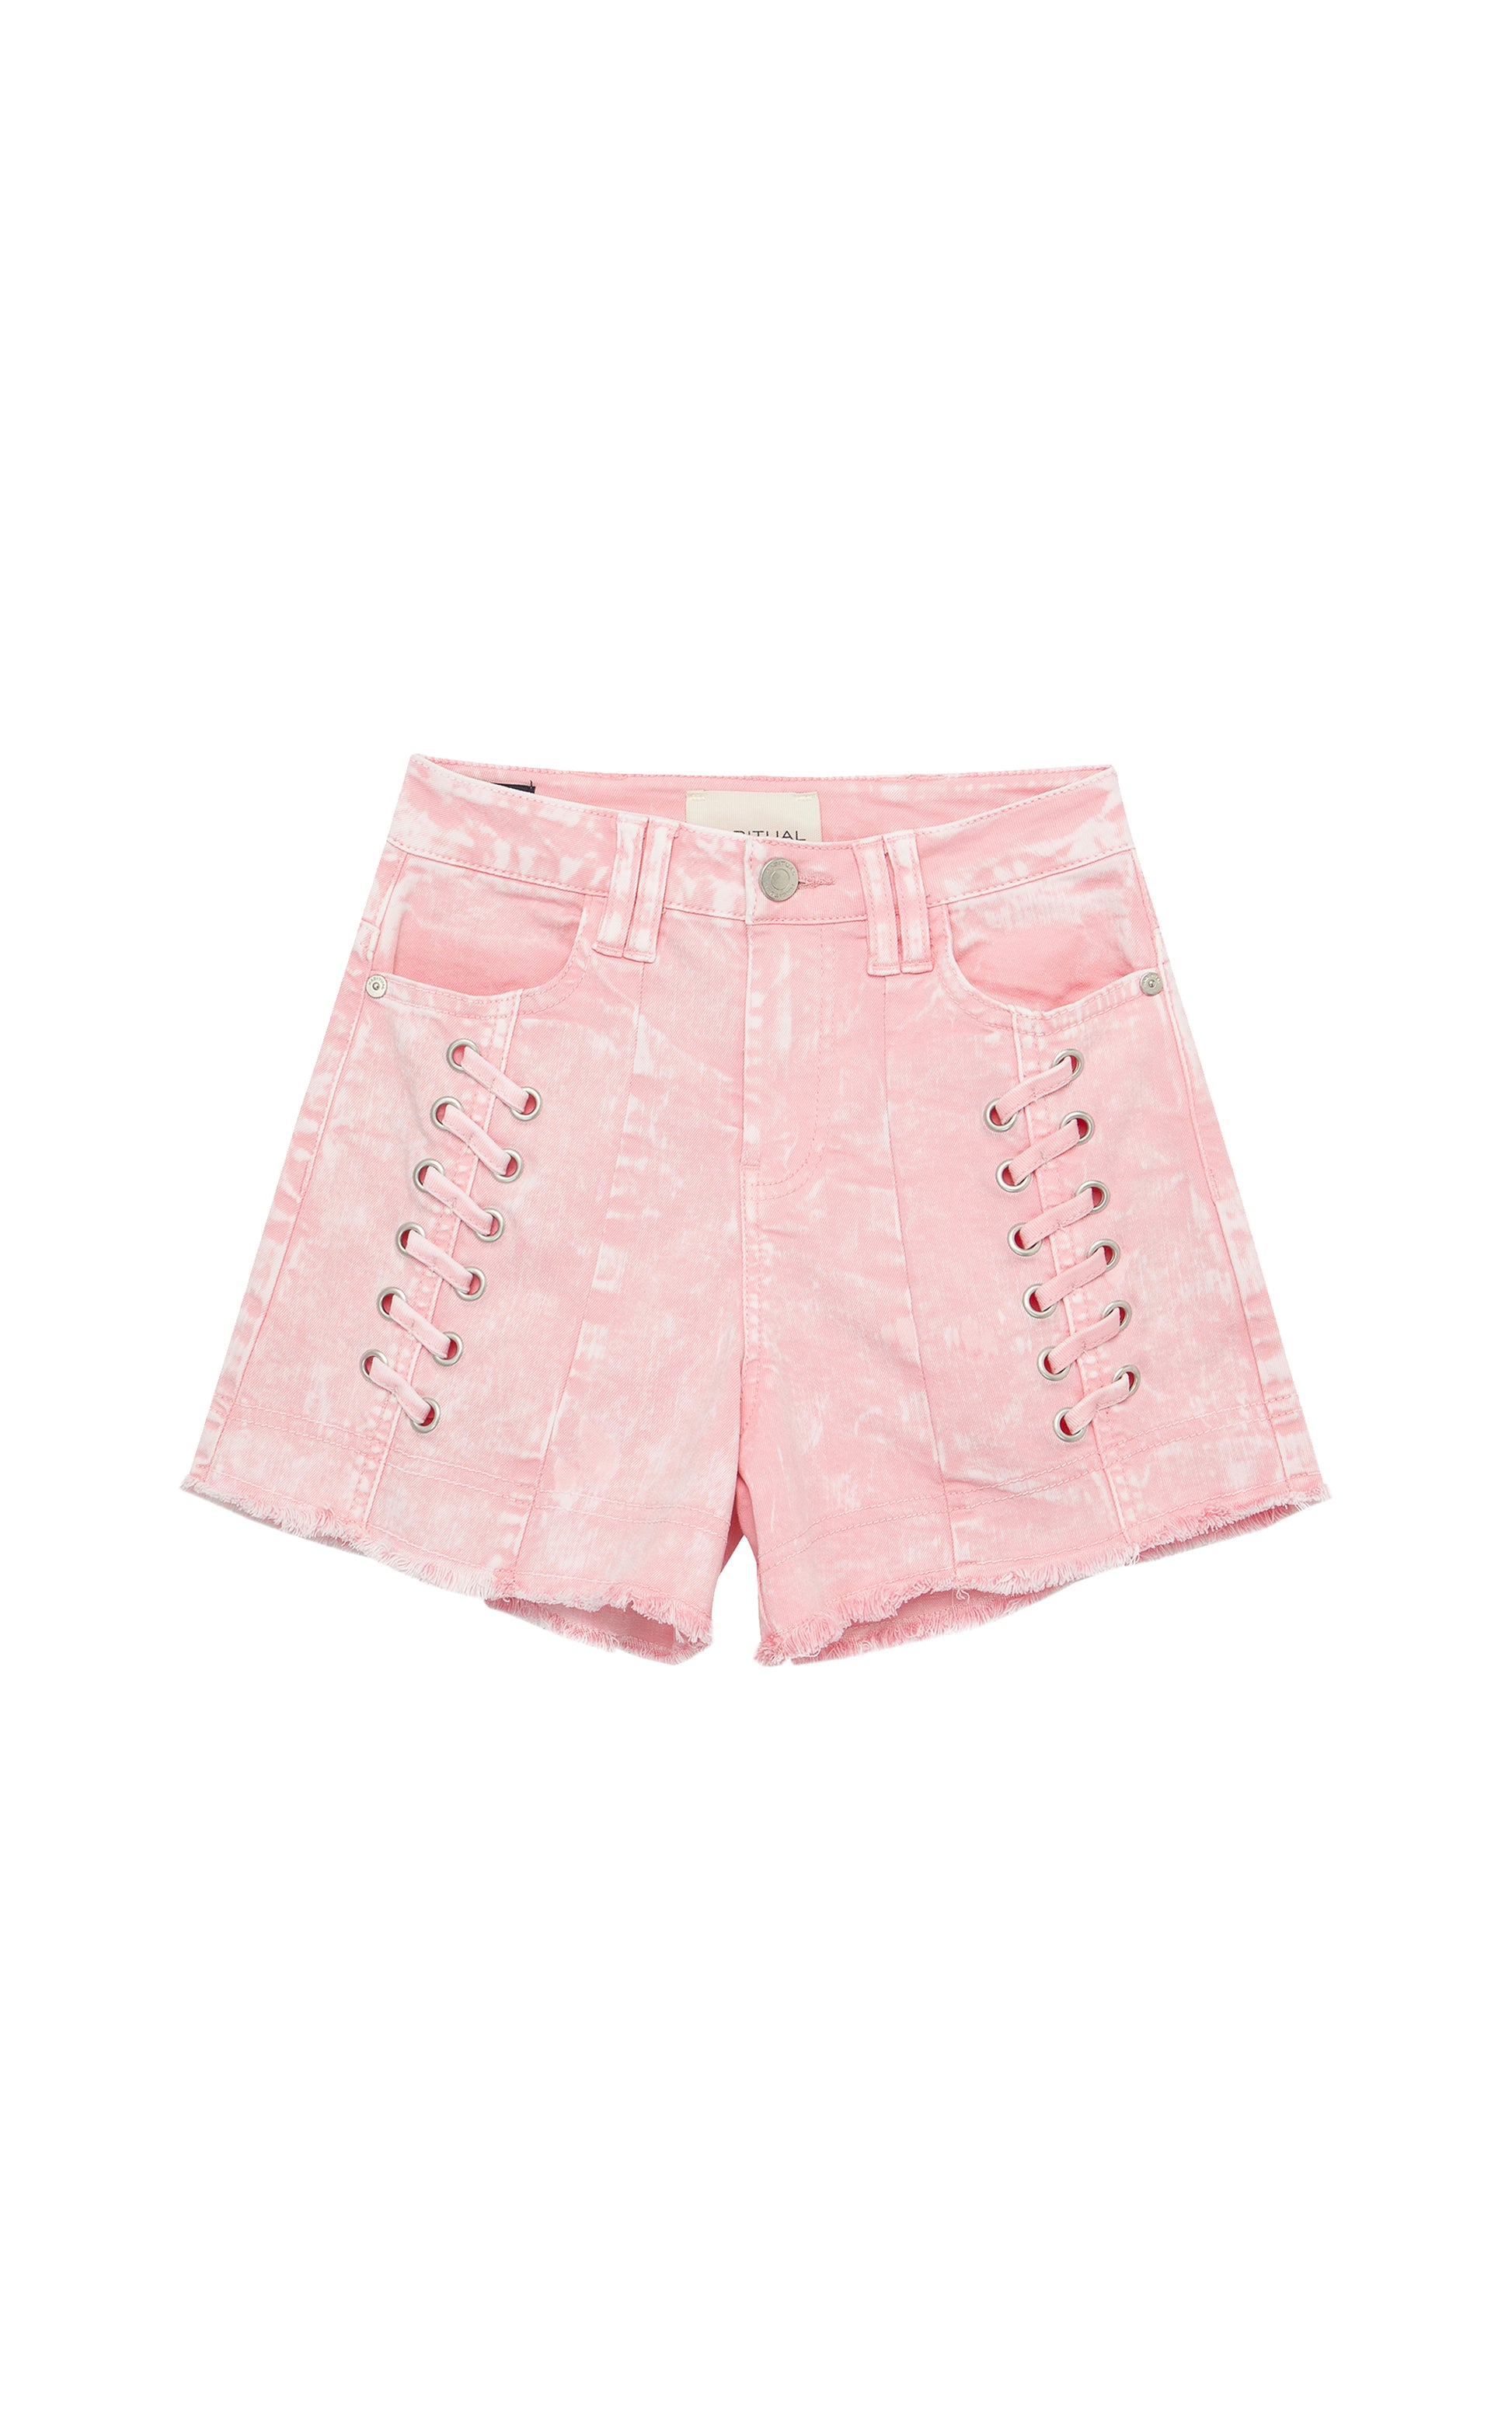 Pink denim lace front shorts